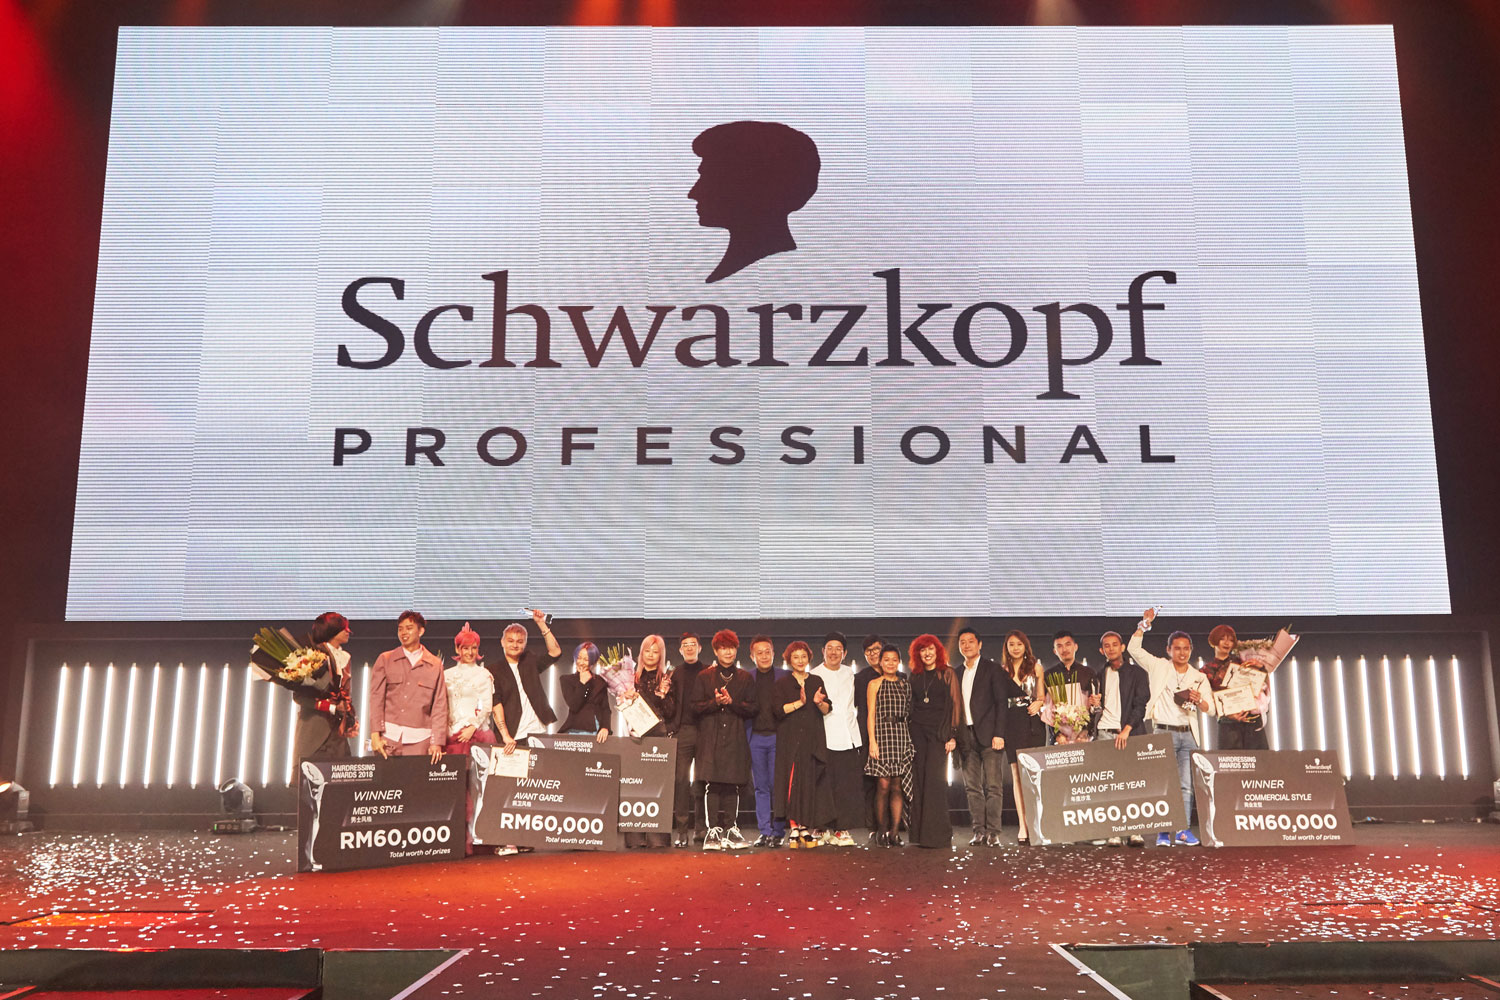 The 1st Schwarzkopf Professional Shaping Authentic Beauty Kongress 2018